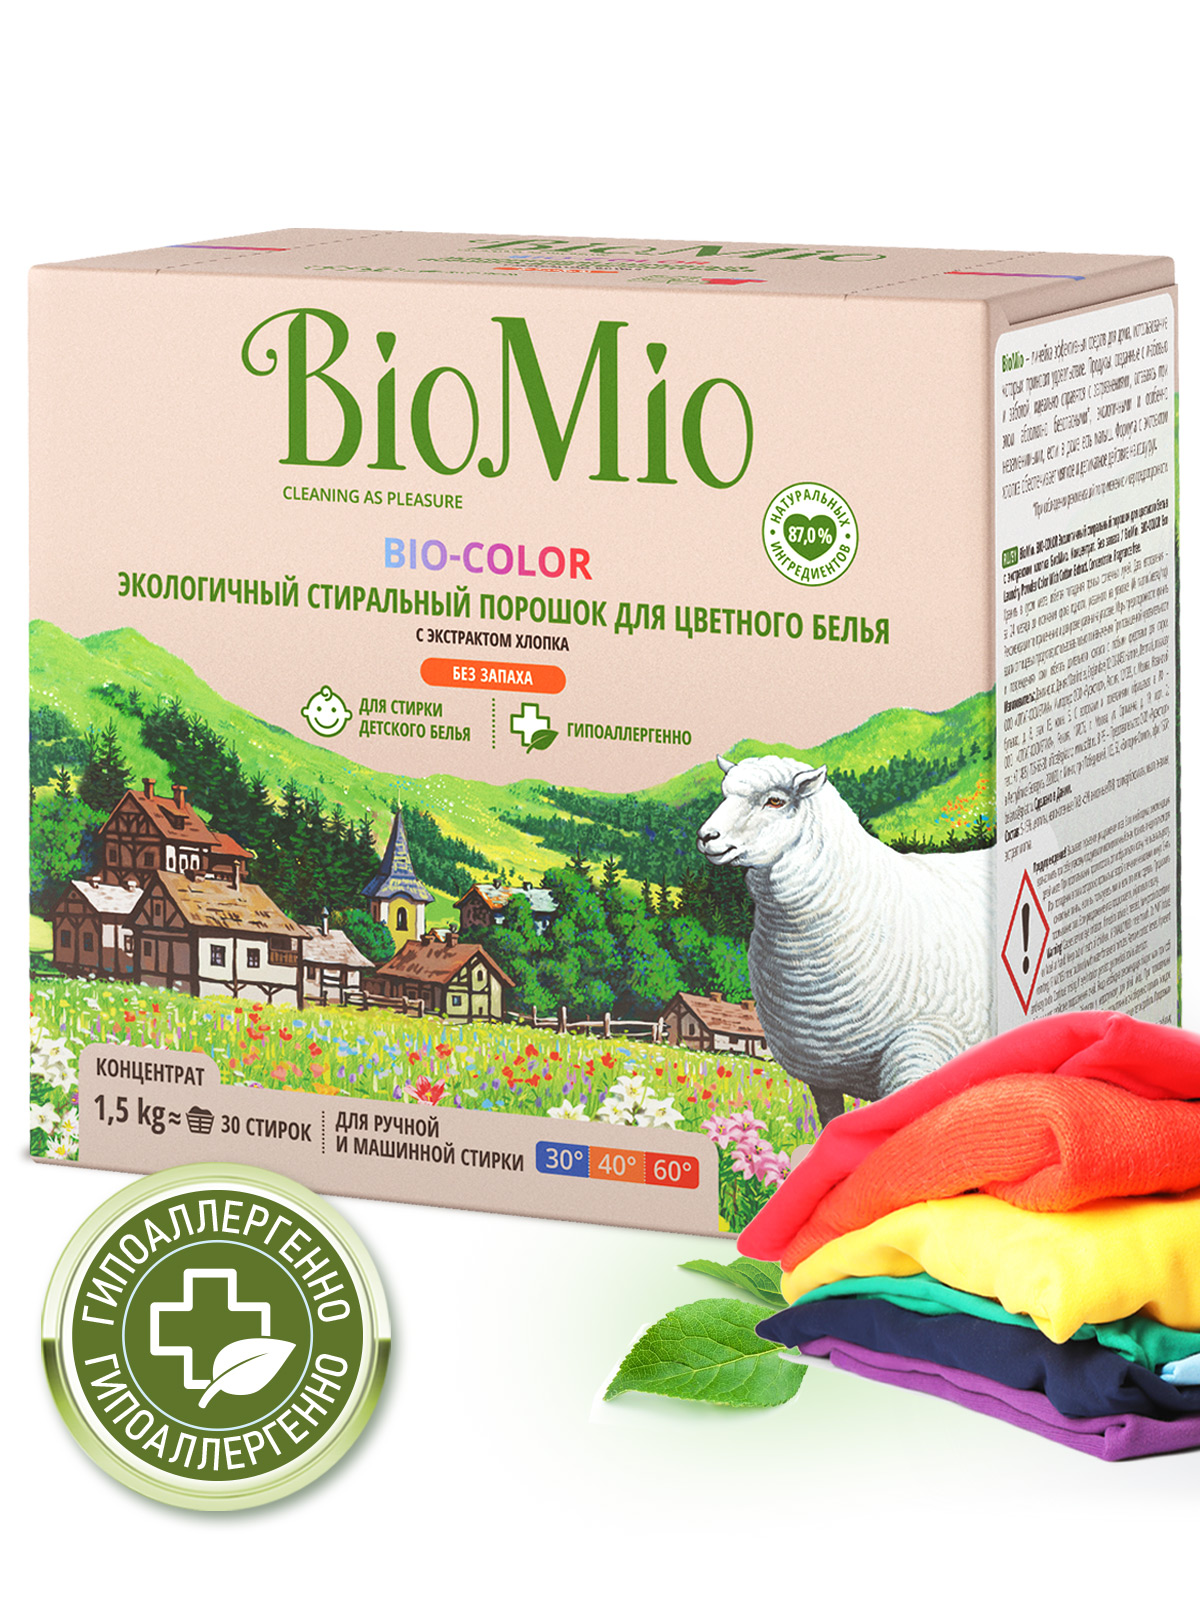 Пральний порошок для кольорової білизни BioMio Bio-Color, концентрат, 1,5 кг - фото 2